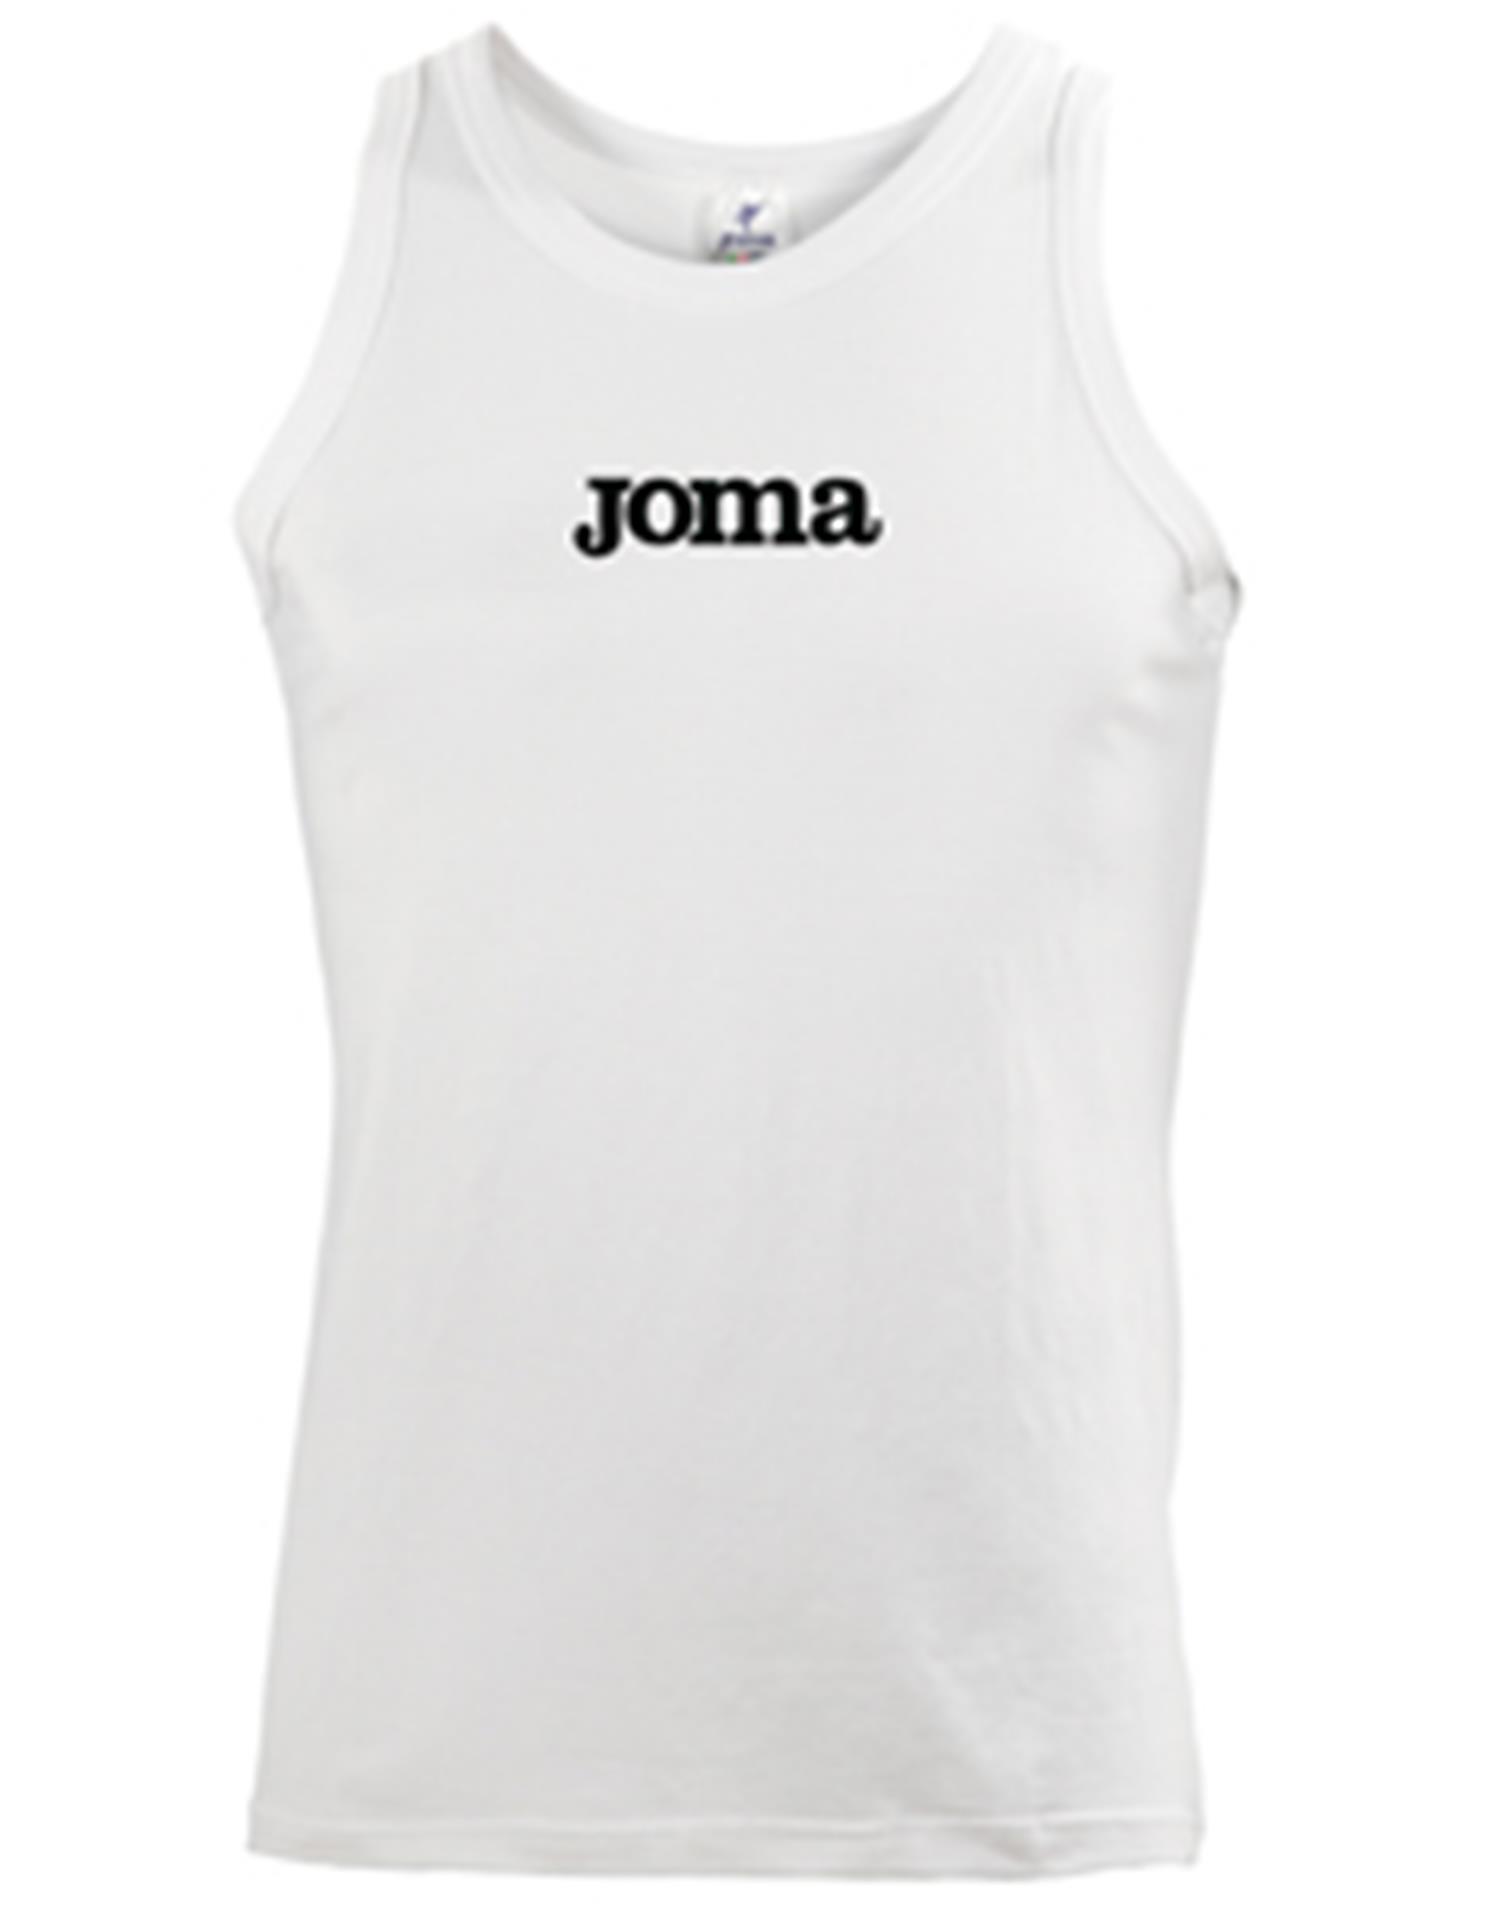 JOMA T-shirt smanicata bia (14 ANNI - BIANCO)